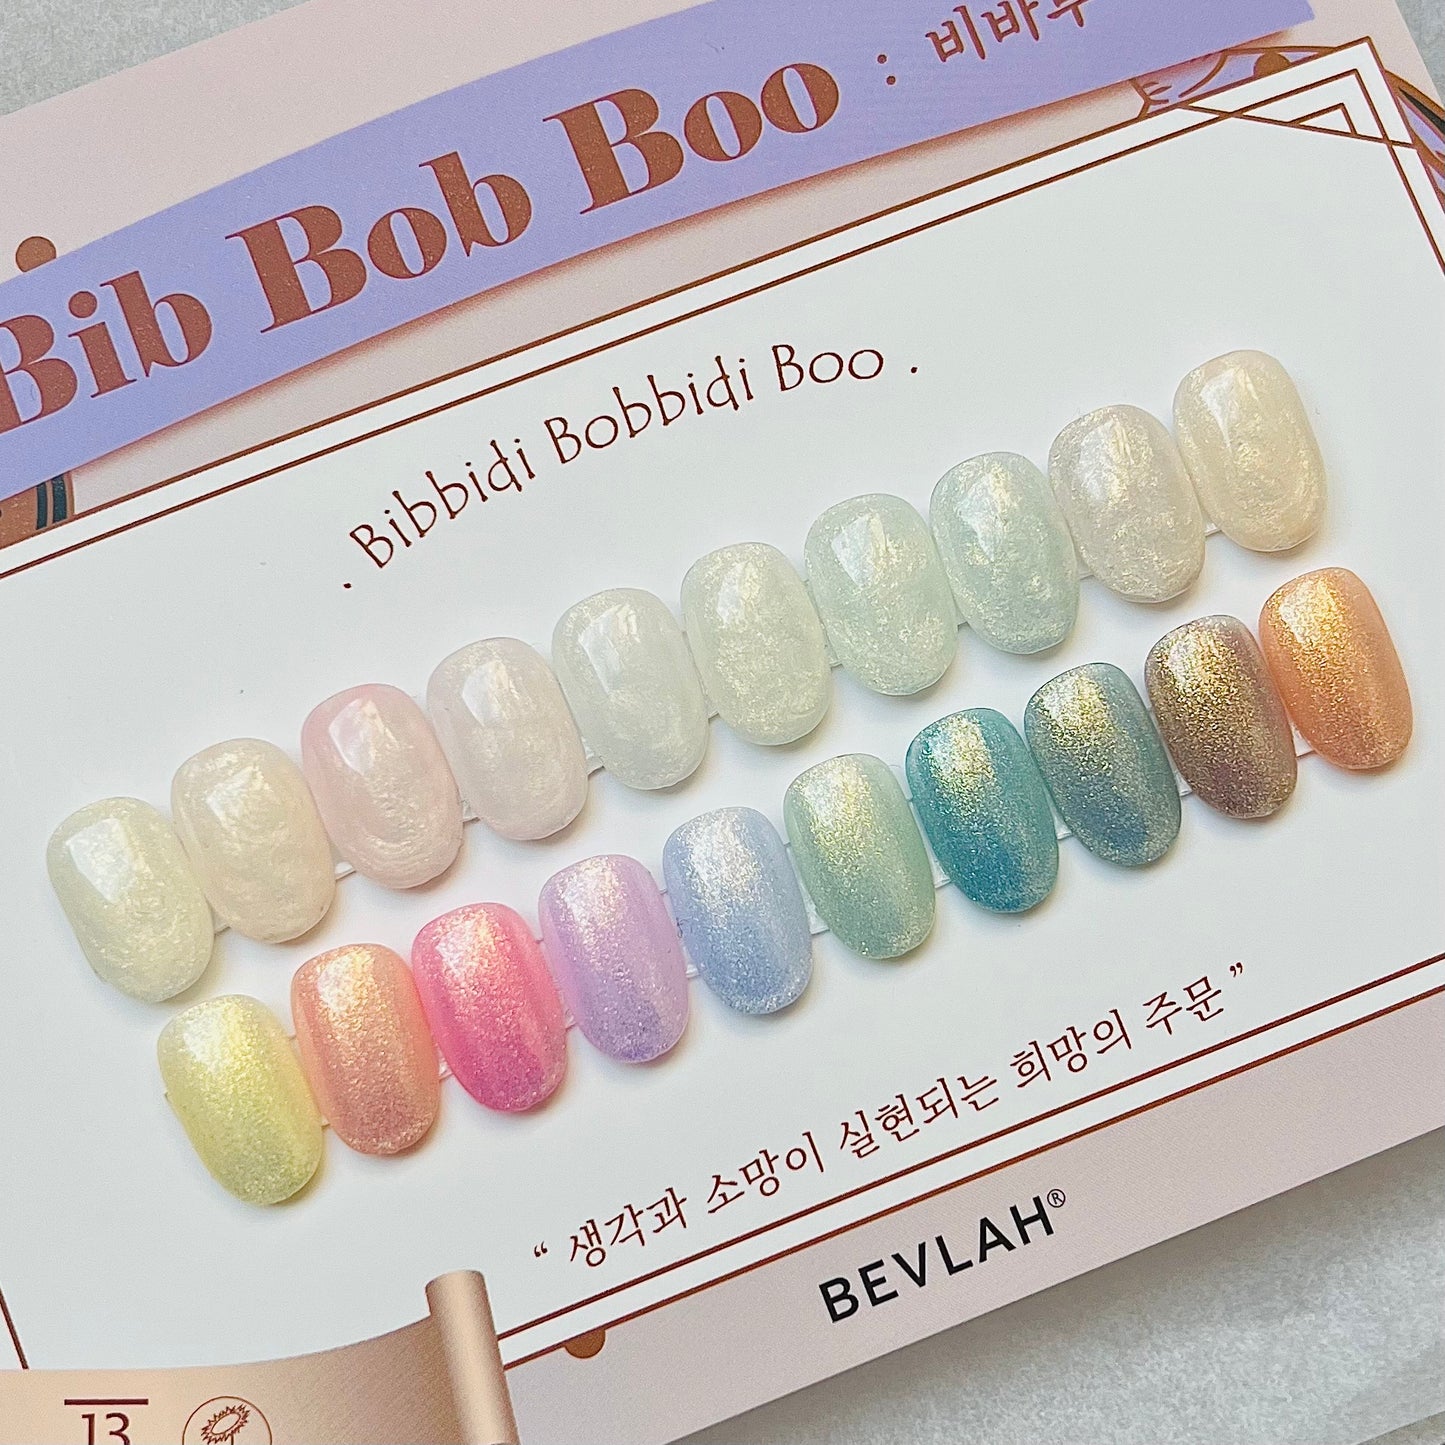 BEVLAH Bib Bob Boo collection (HEMA FREE)